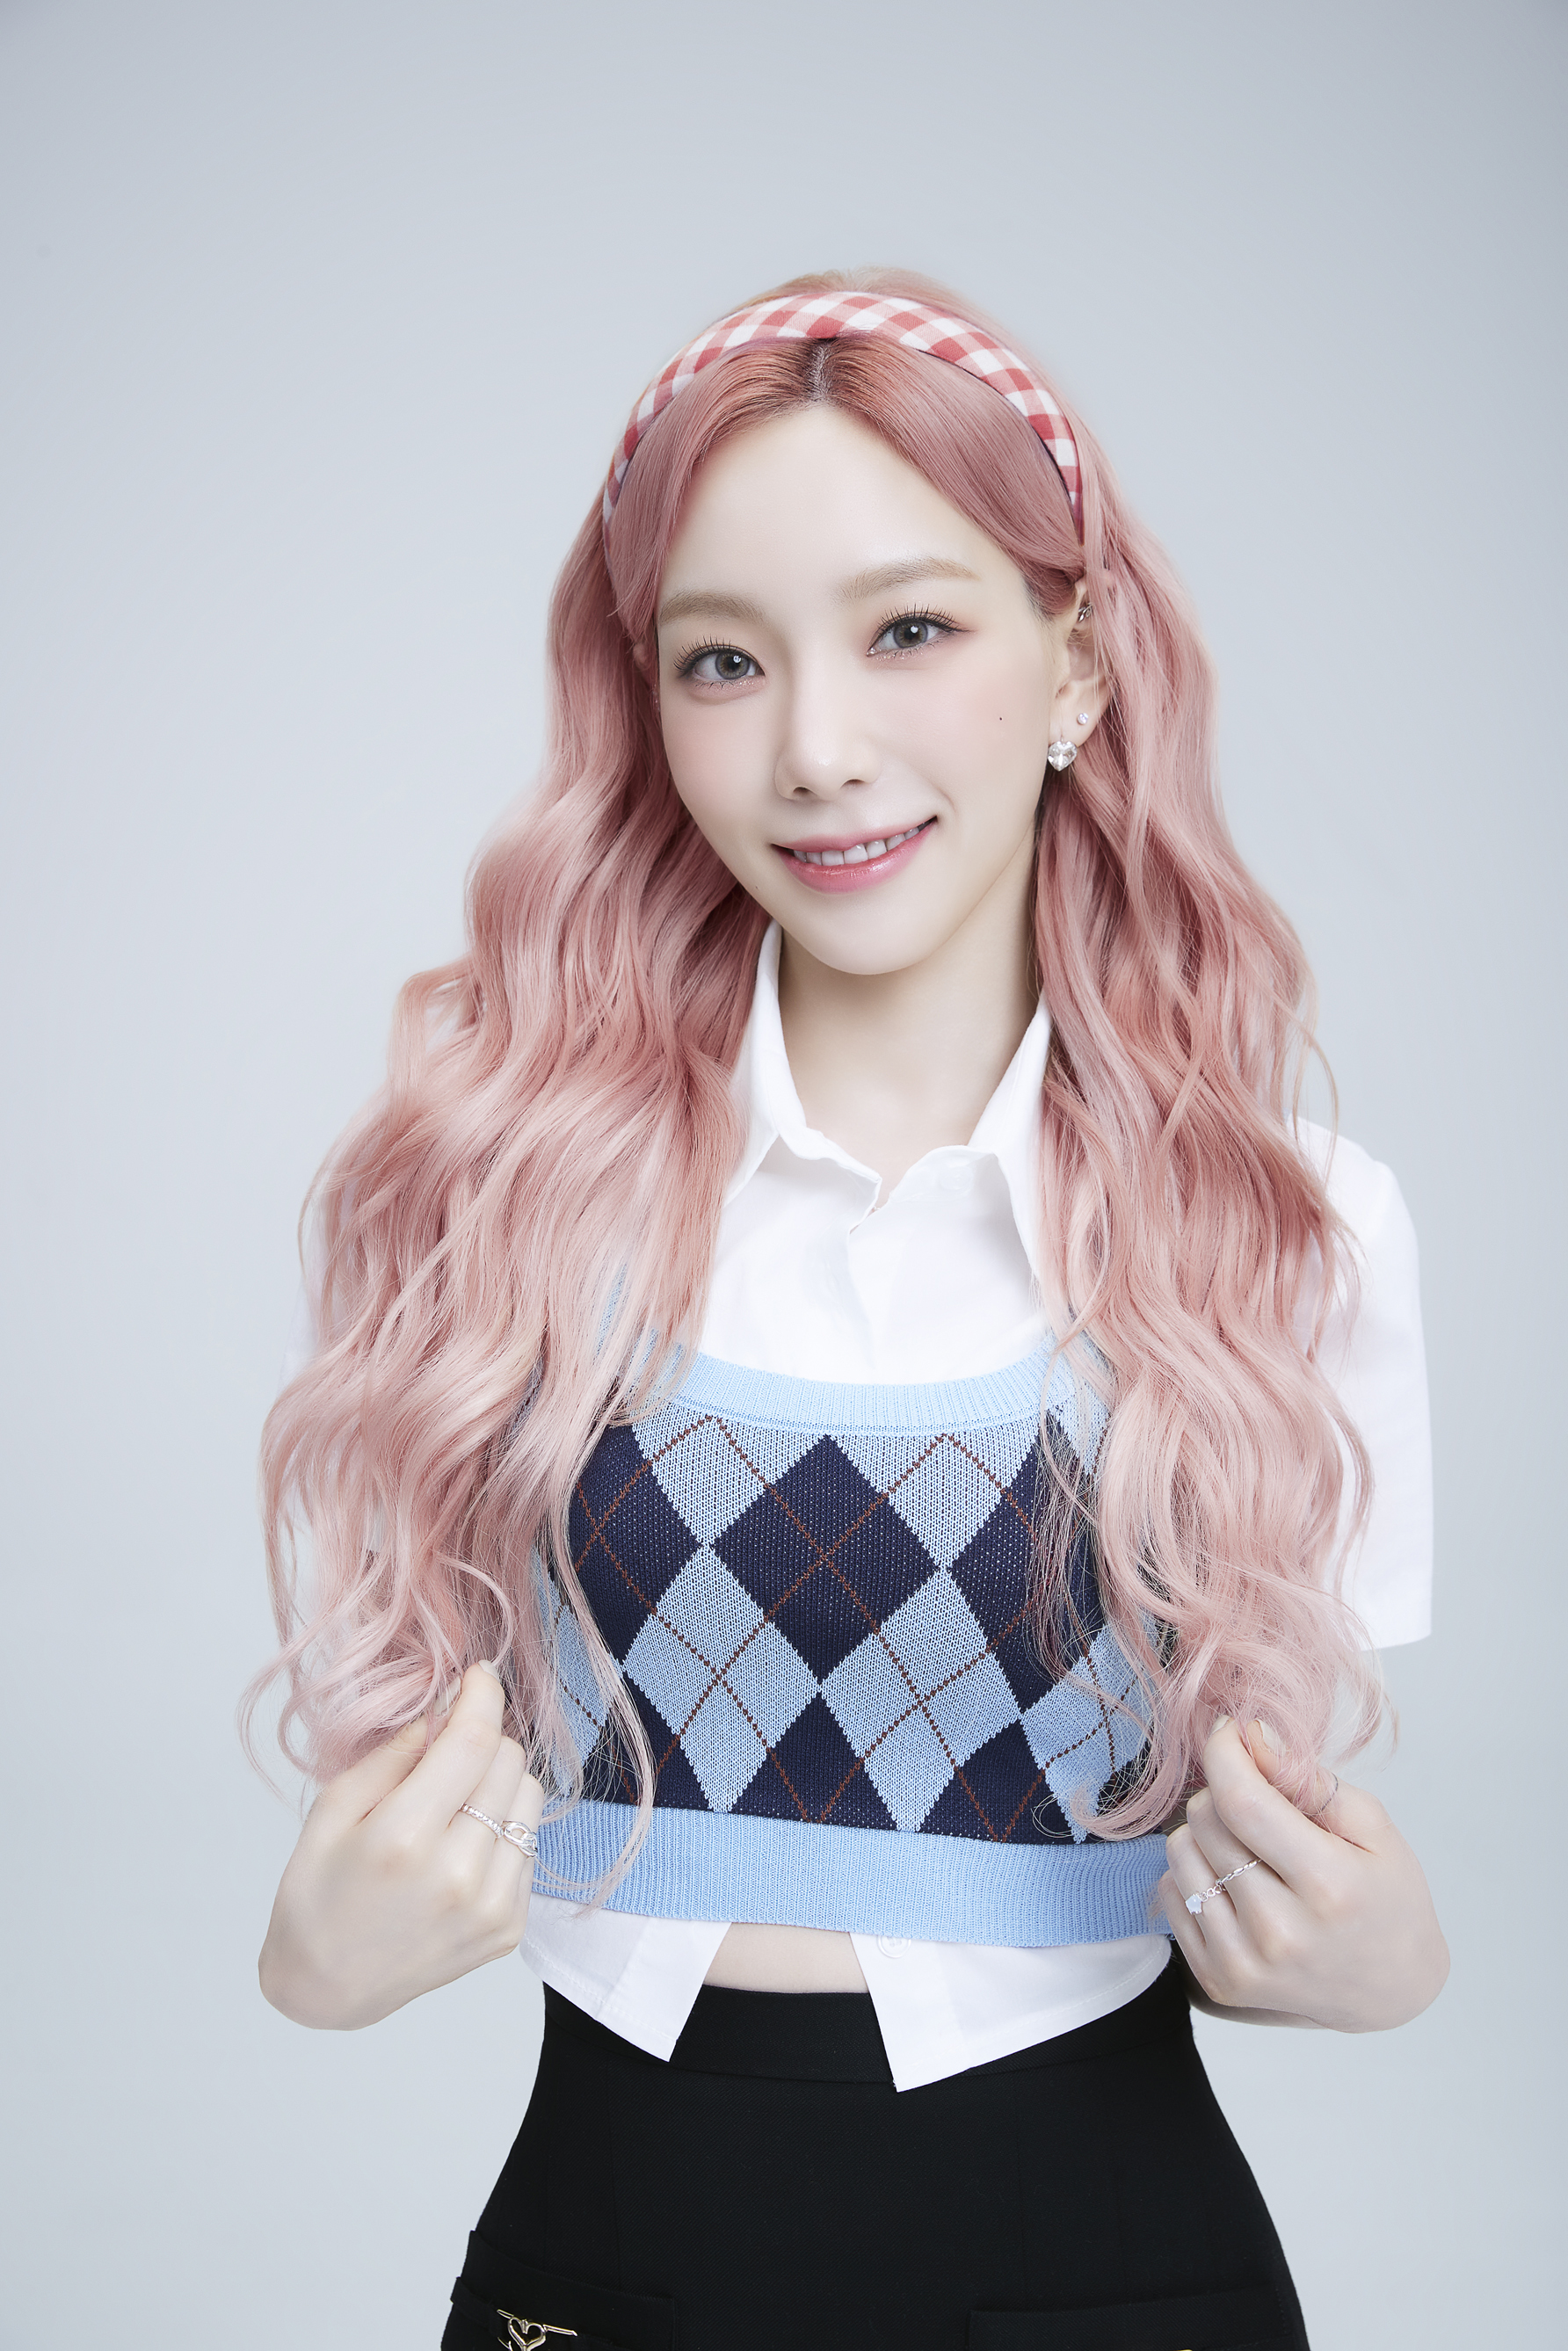 K Pop Kim Taeyeon SNSD Taeyeon Korean Women Model Singer Strawberry Blonde Dyed Hair Contact Lenses  1784x2675